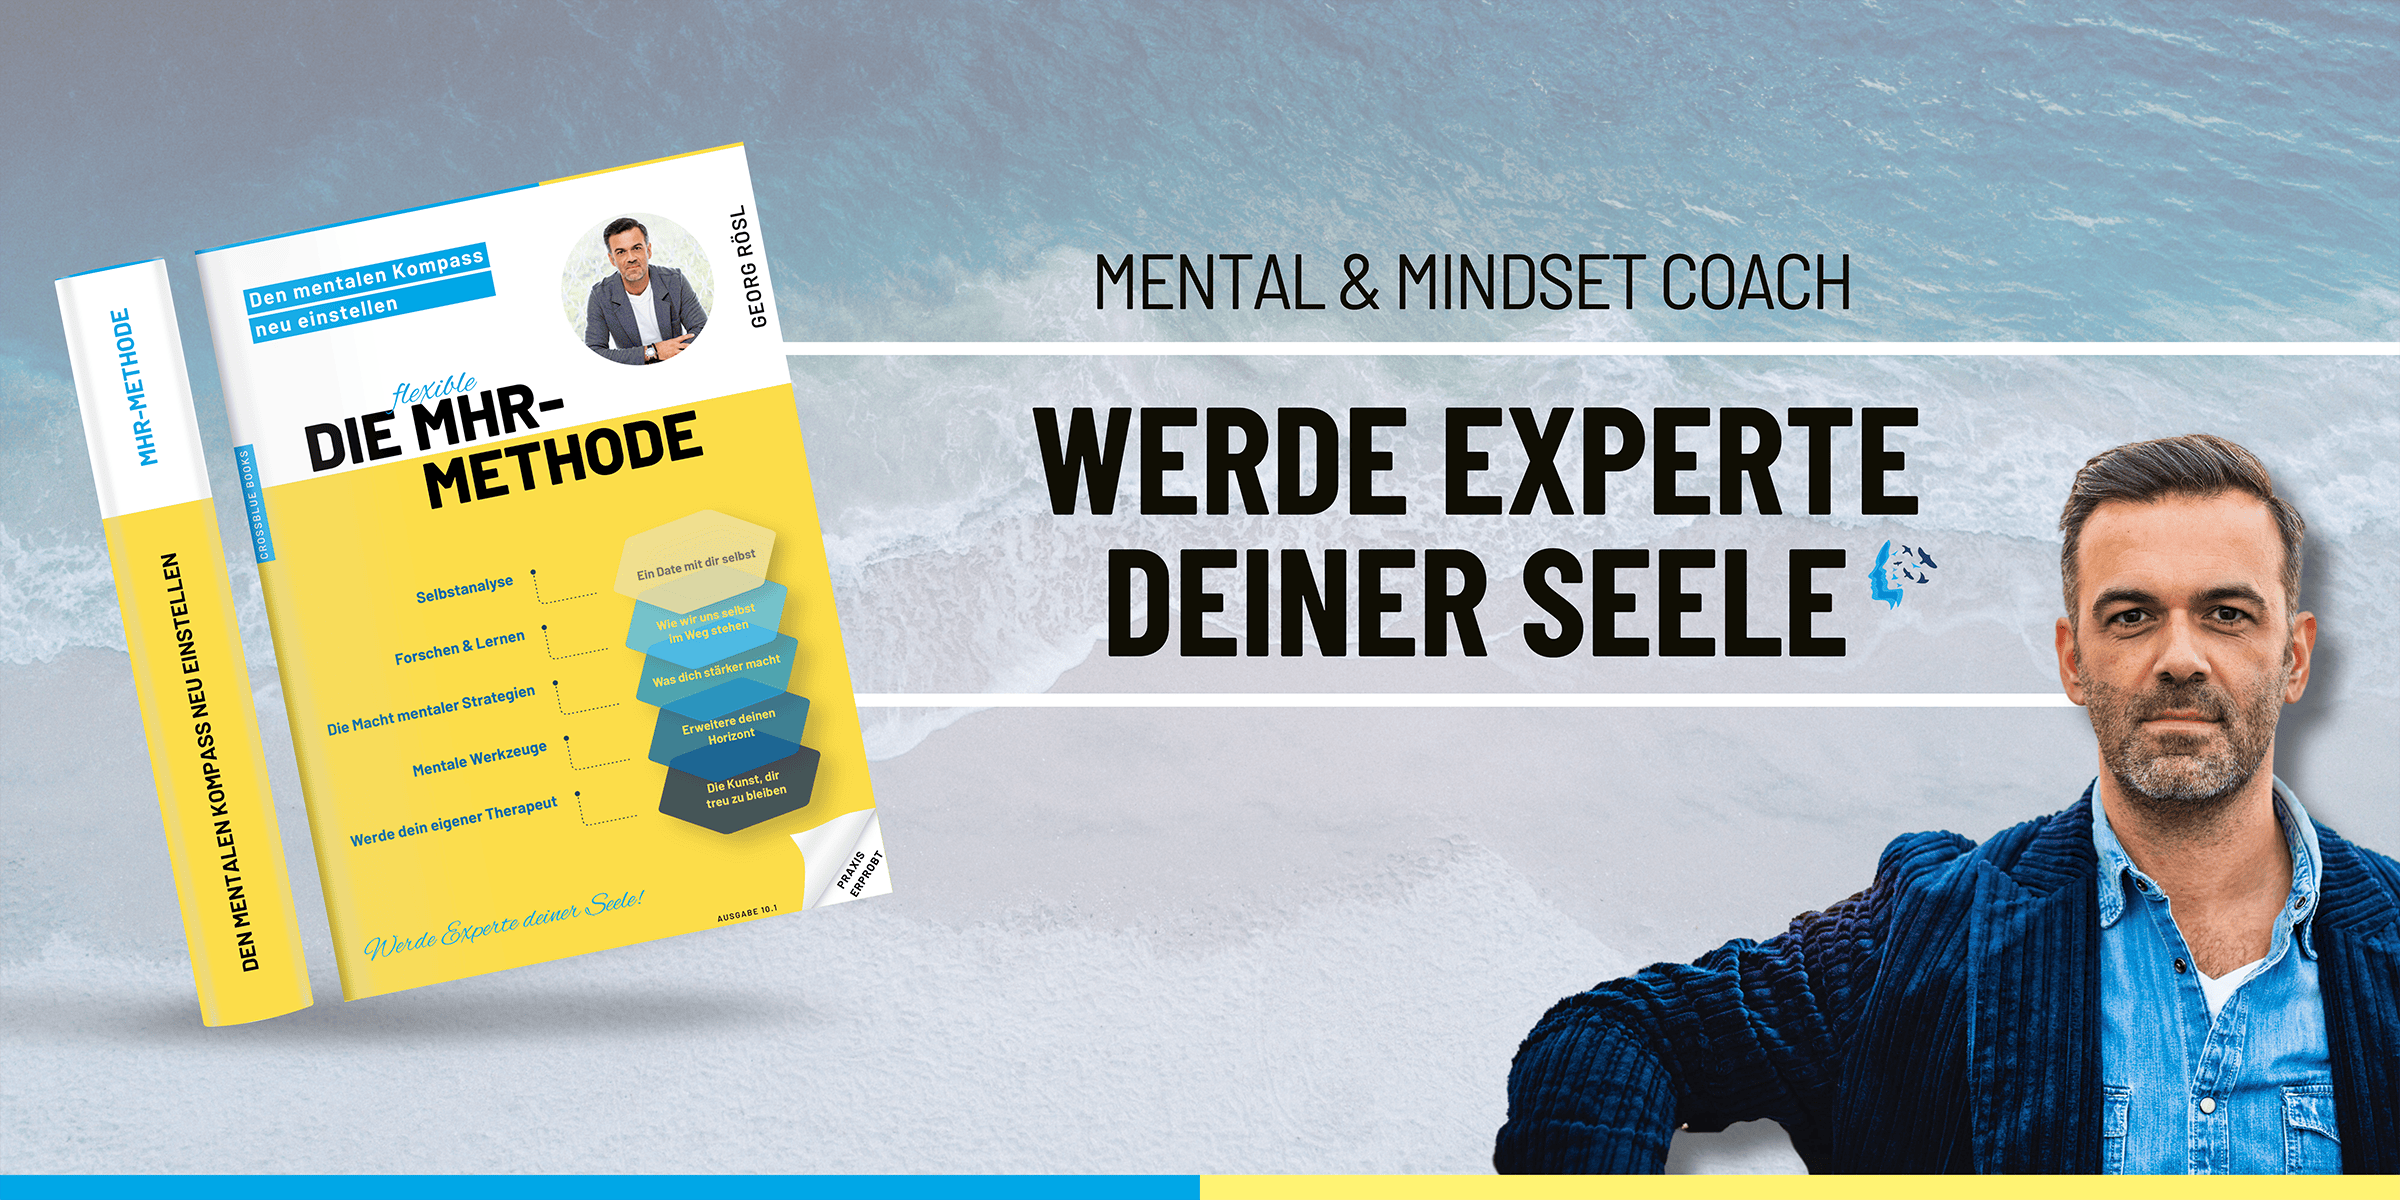 Mental & Mindset Coach: Werde Experte deiner Seele